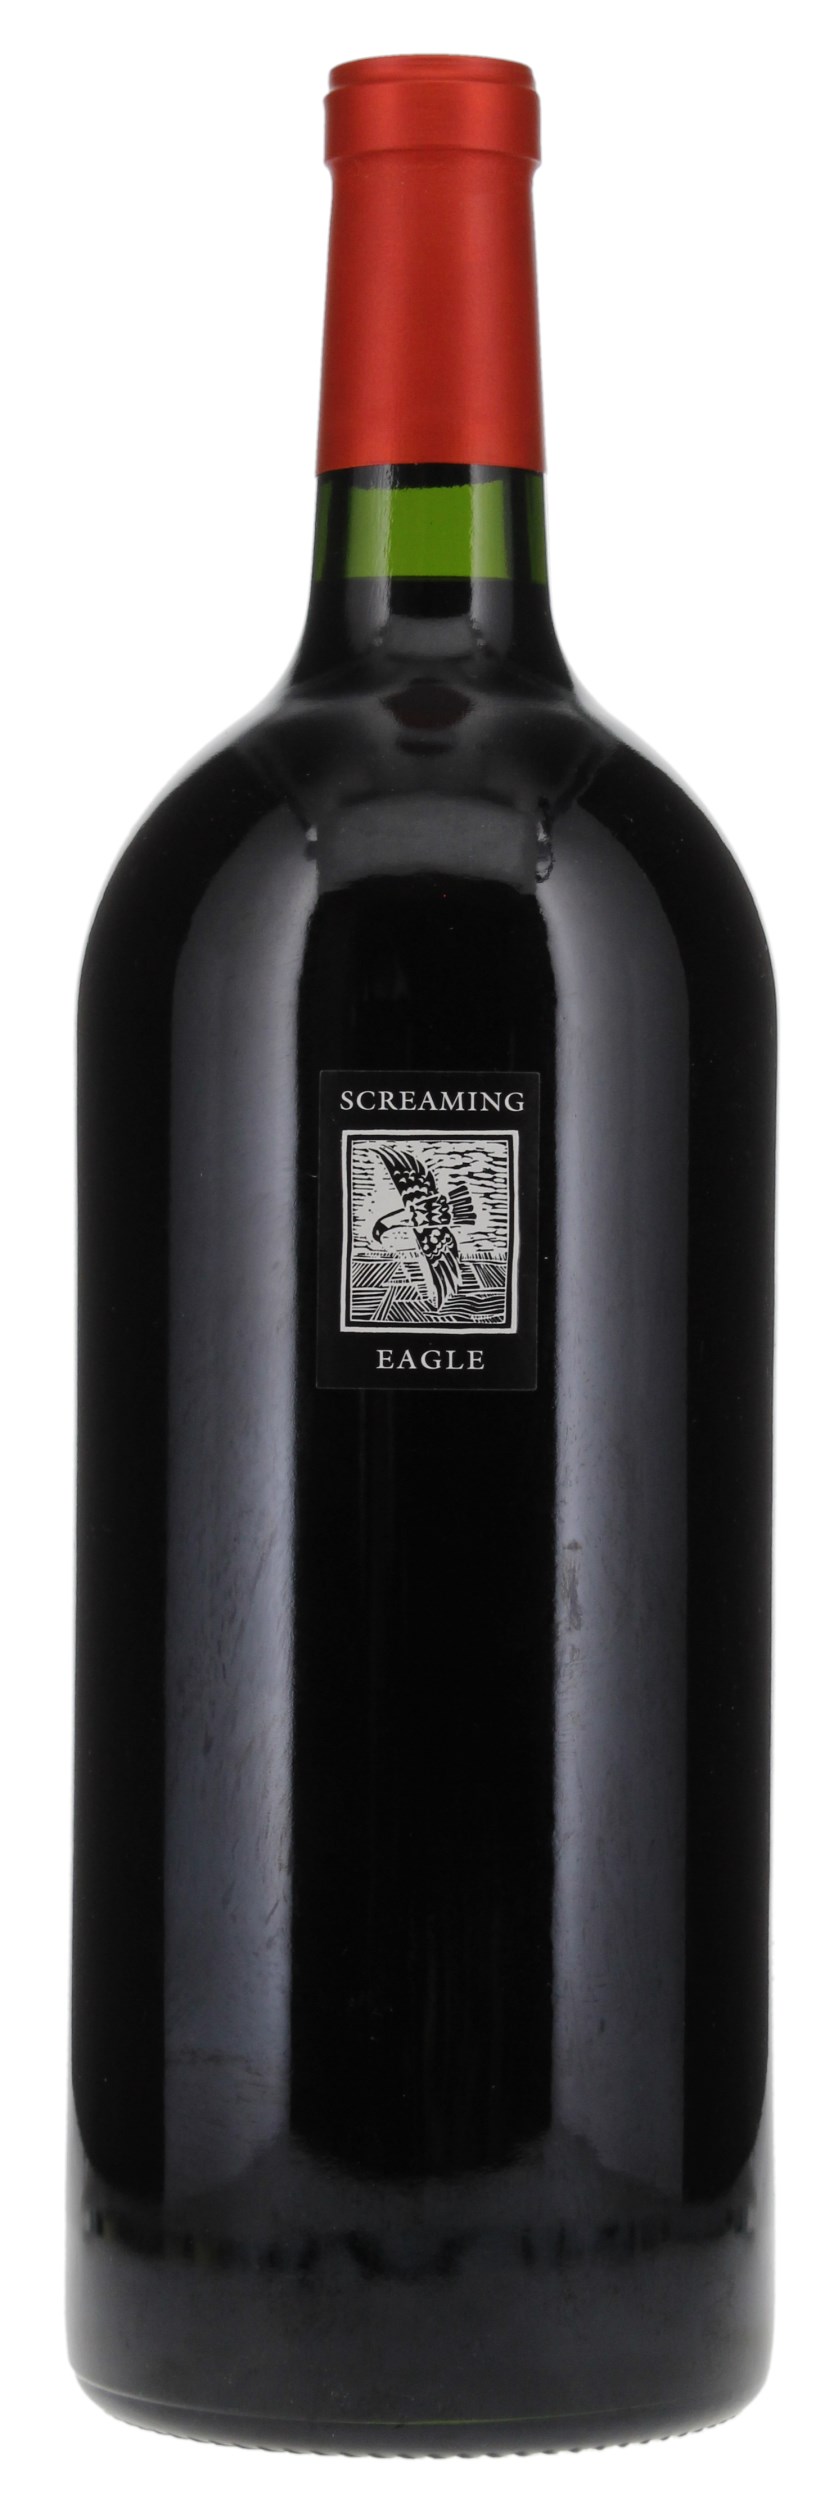 2001 Screaming Eagle Cabernet Sauvignon, 3.0ltr